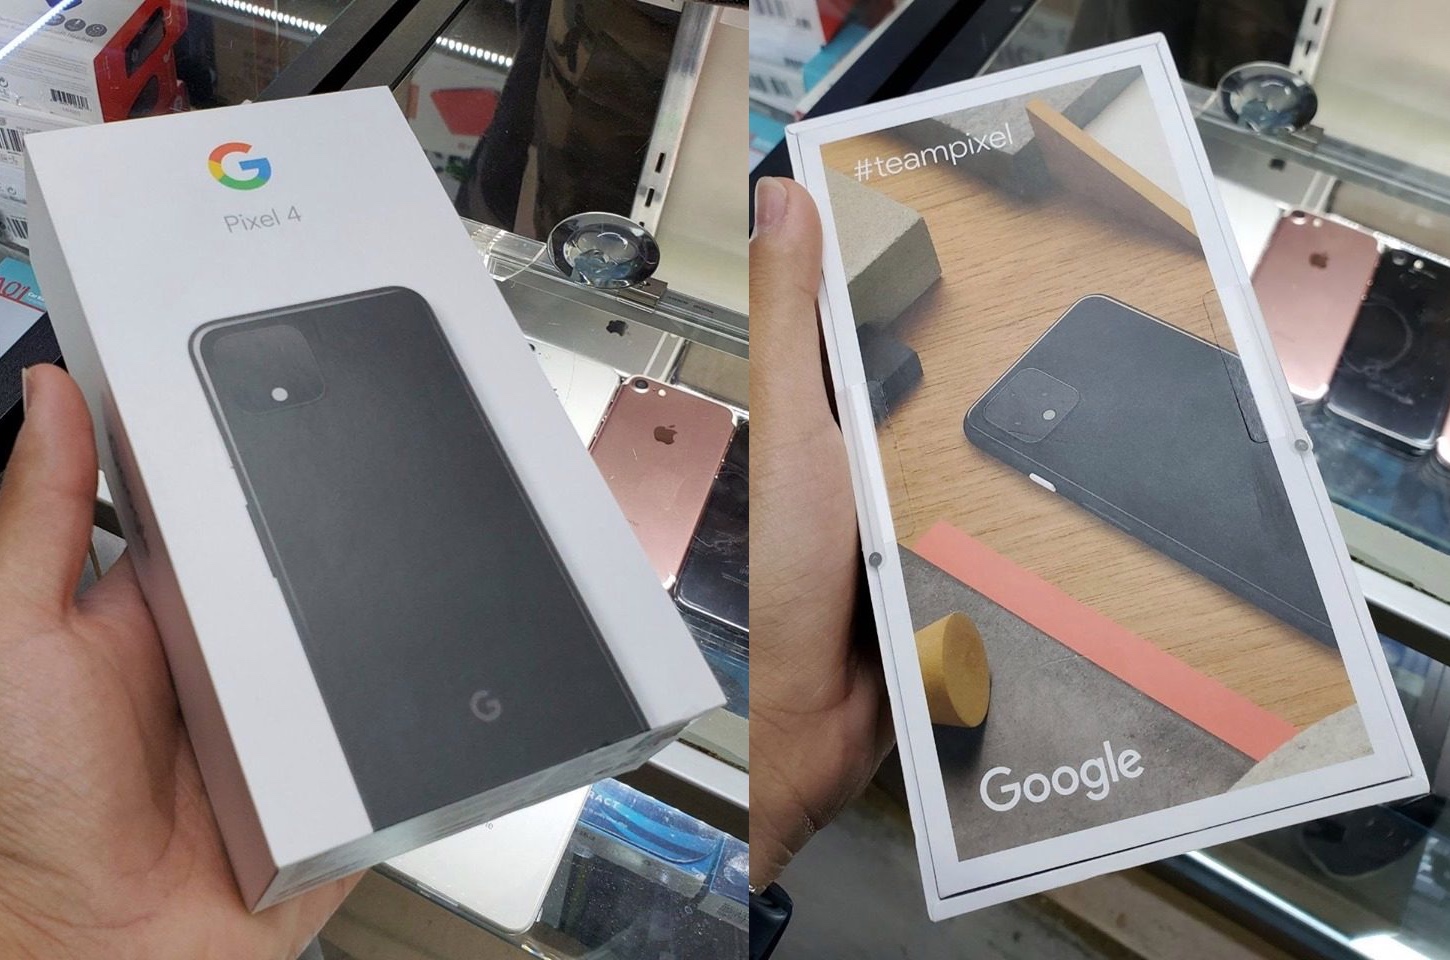 ｢Google Pixel 4｣のパッケージ写真が流出 − 同梱物の詳細が明らかに